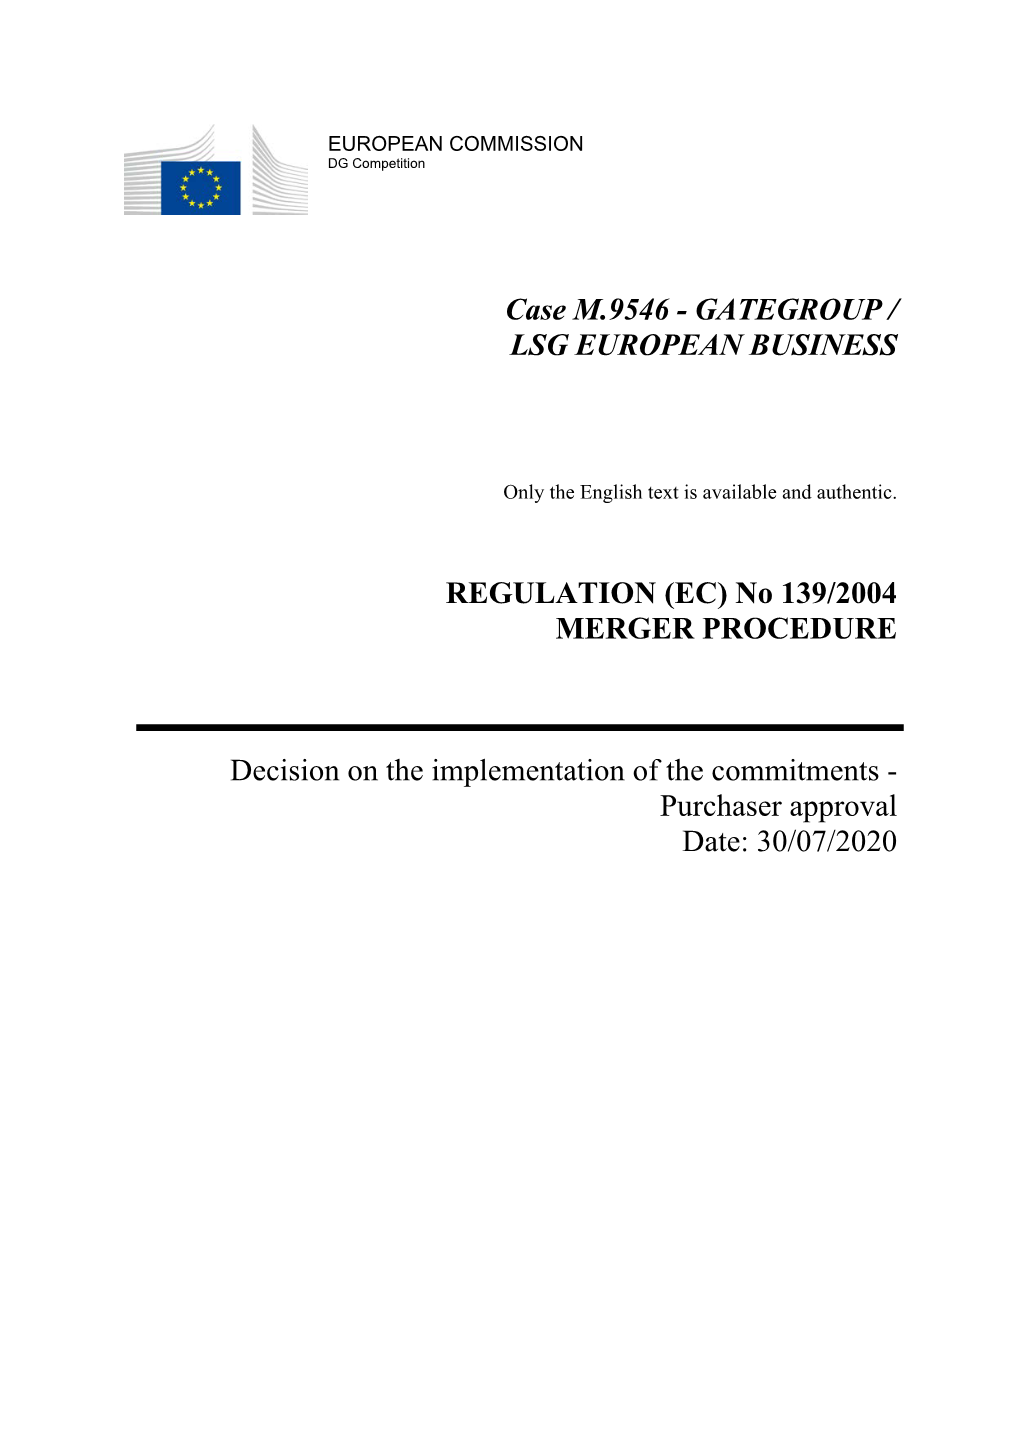 Gategroup / Lsg European Business Regulation (Ec)